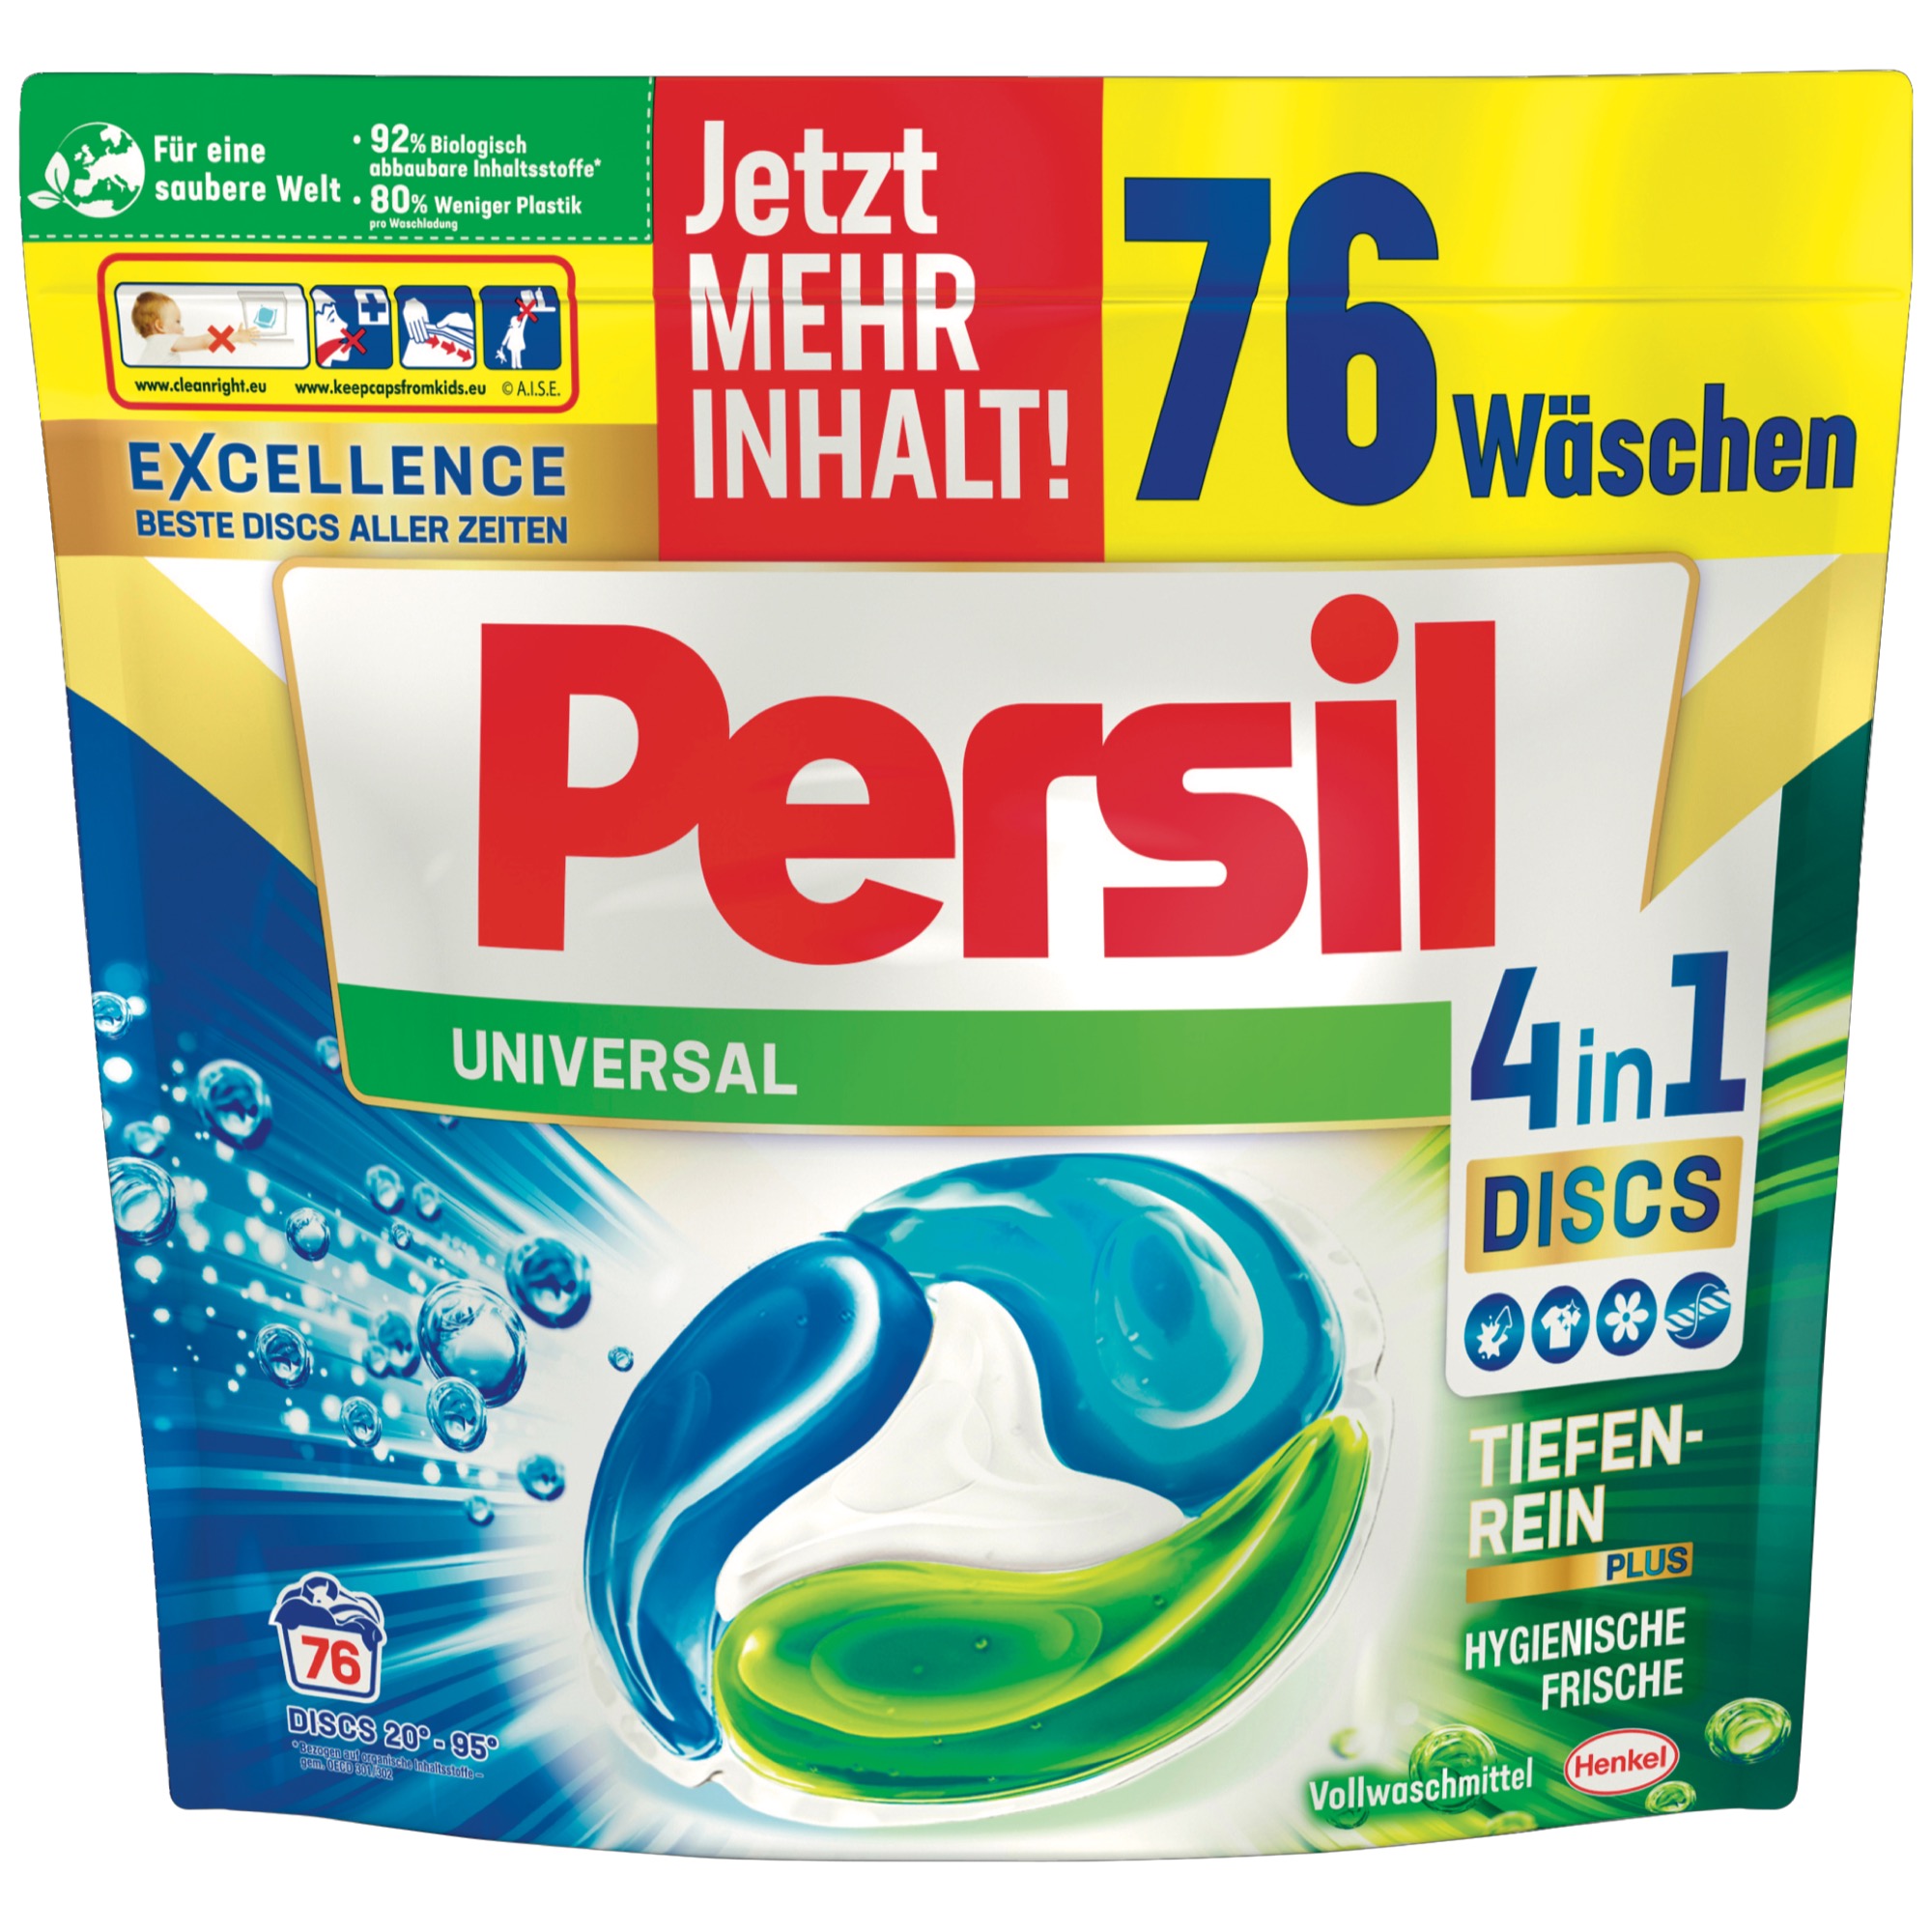 Persil Discs 76WG, Universal